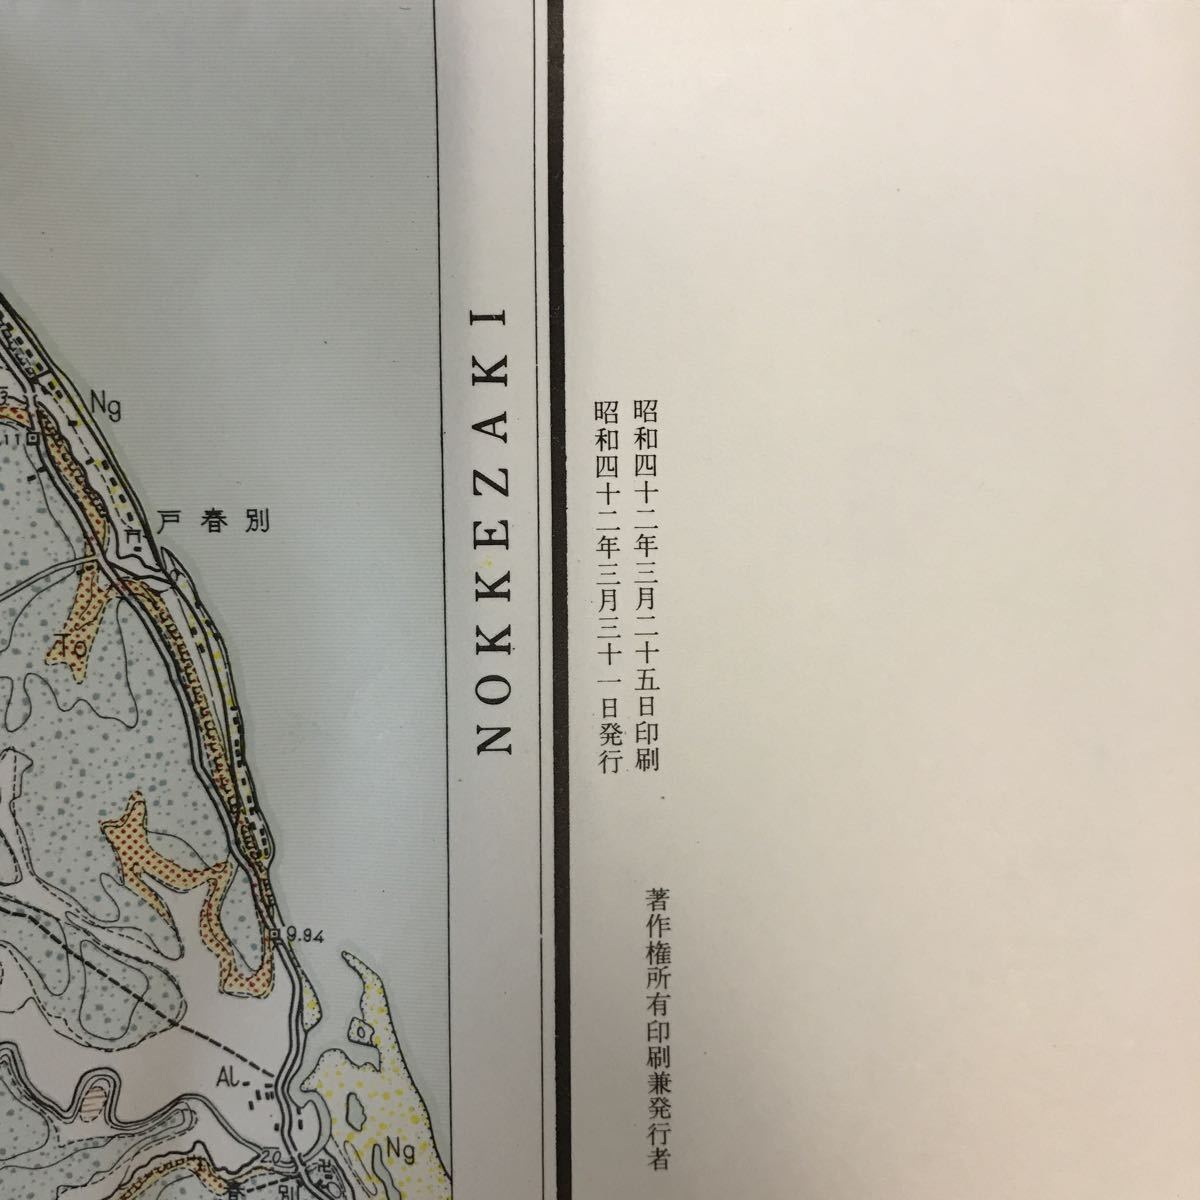 A60-188 5万分の1地質図幅説明書 標津および野付崎（網走一第63,64号）北海道立地下資源調査所 昭和42年の画像7